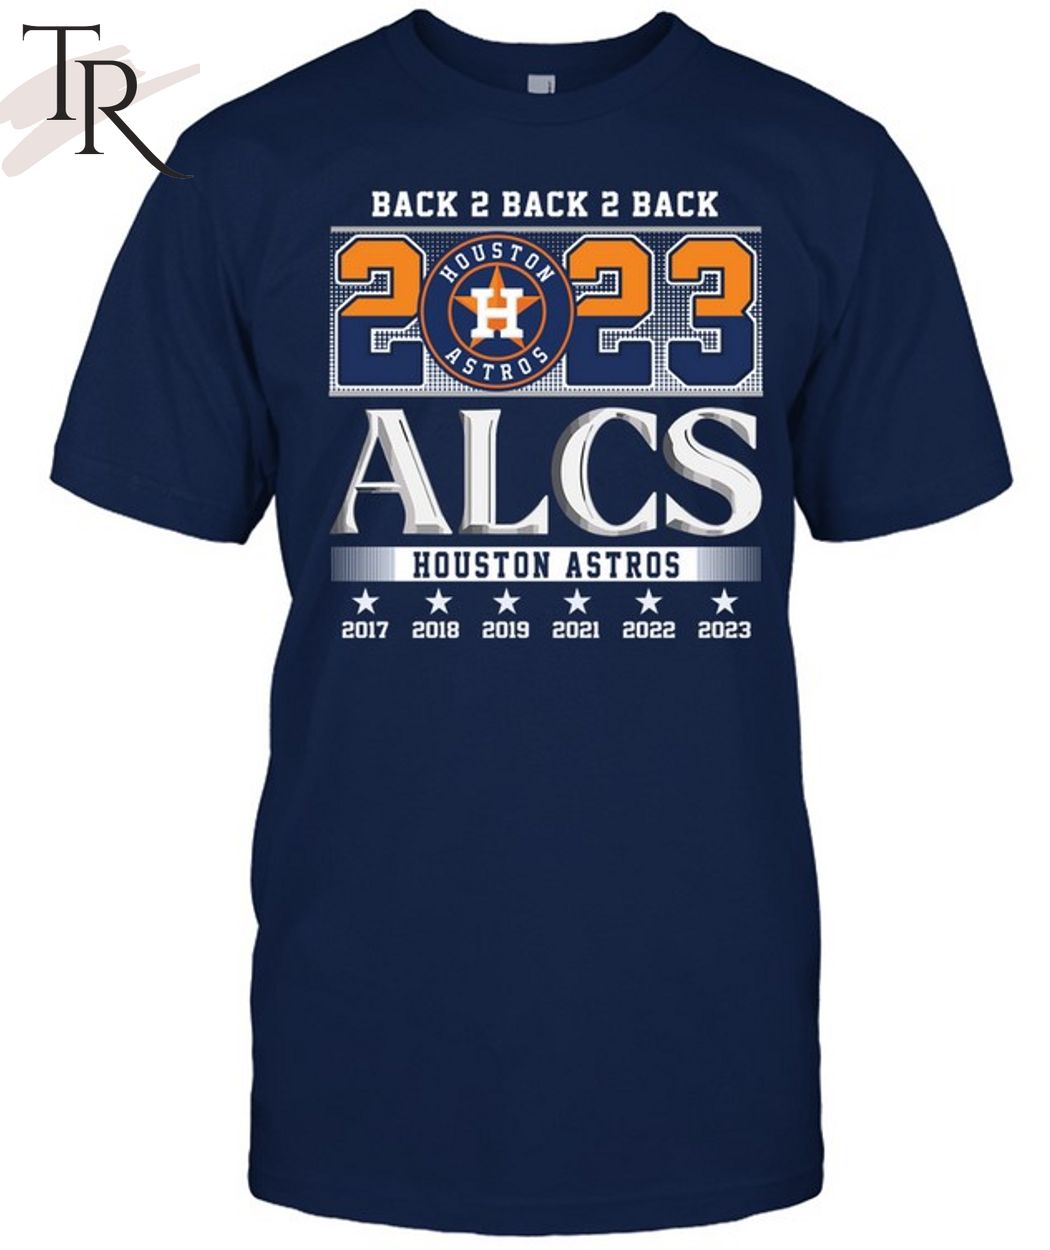 Back 2 Back 2 Back 2023 Alcs Houston Astros Unisex T-shirt